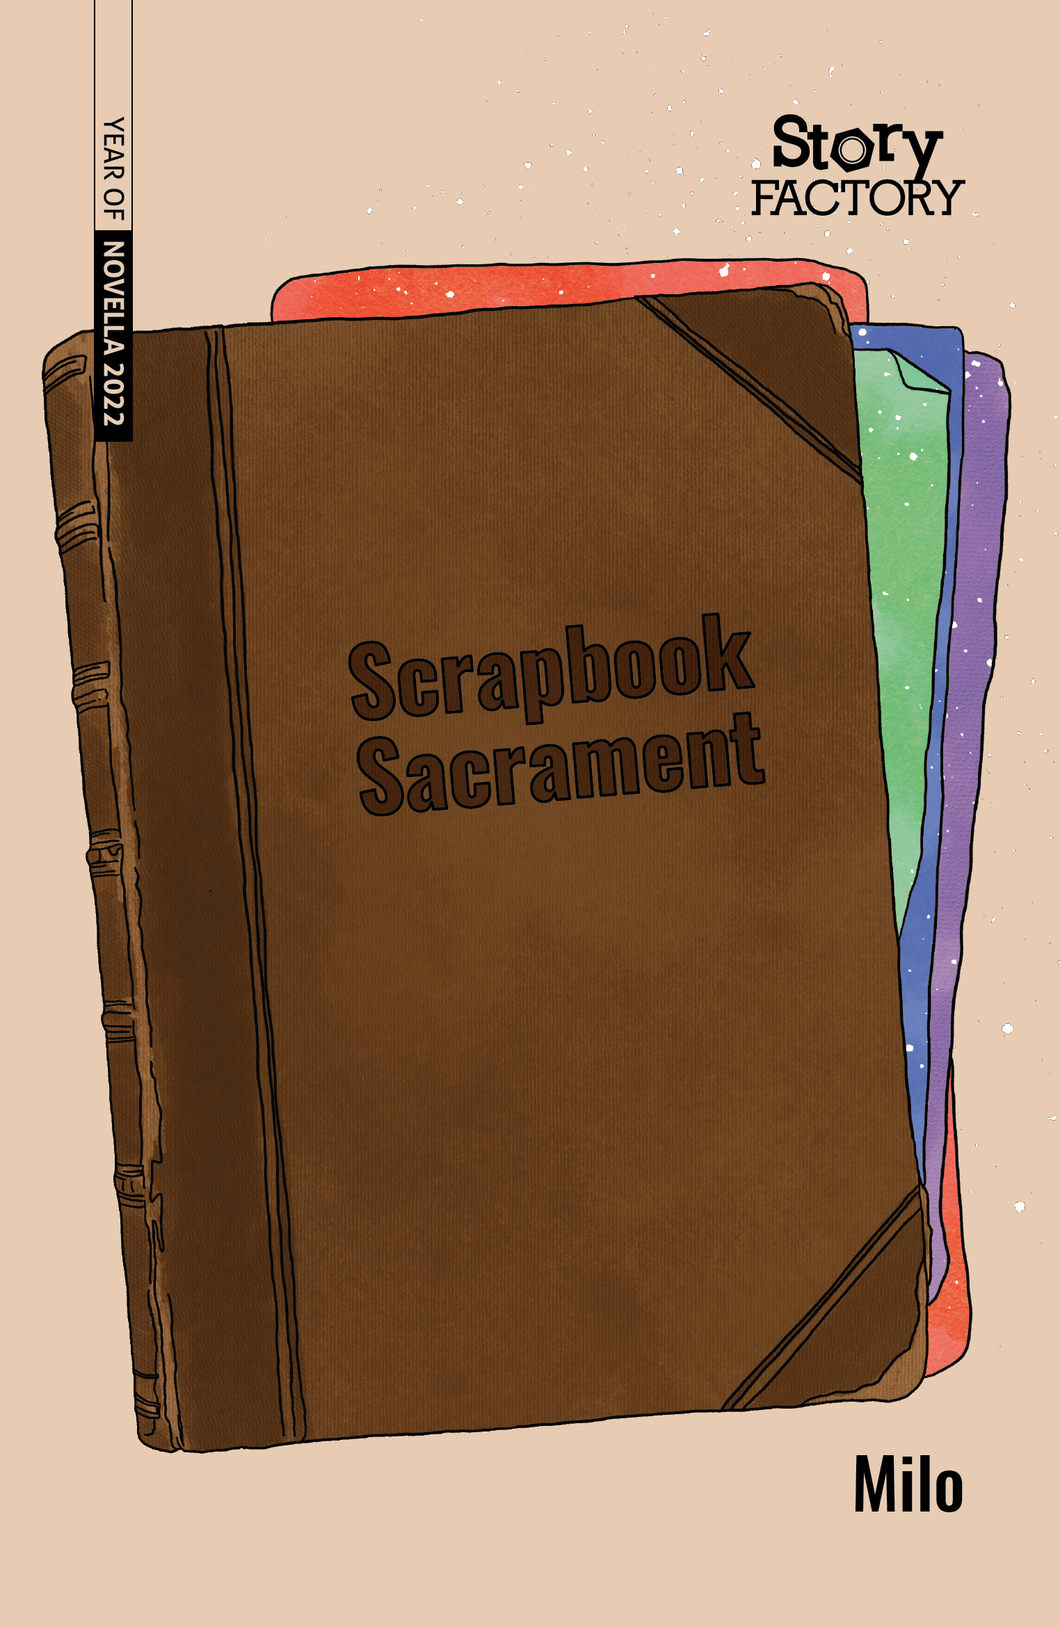 Scrapbook Sacrament by Milo